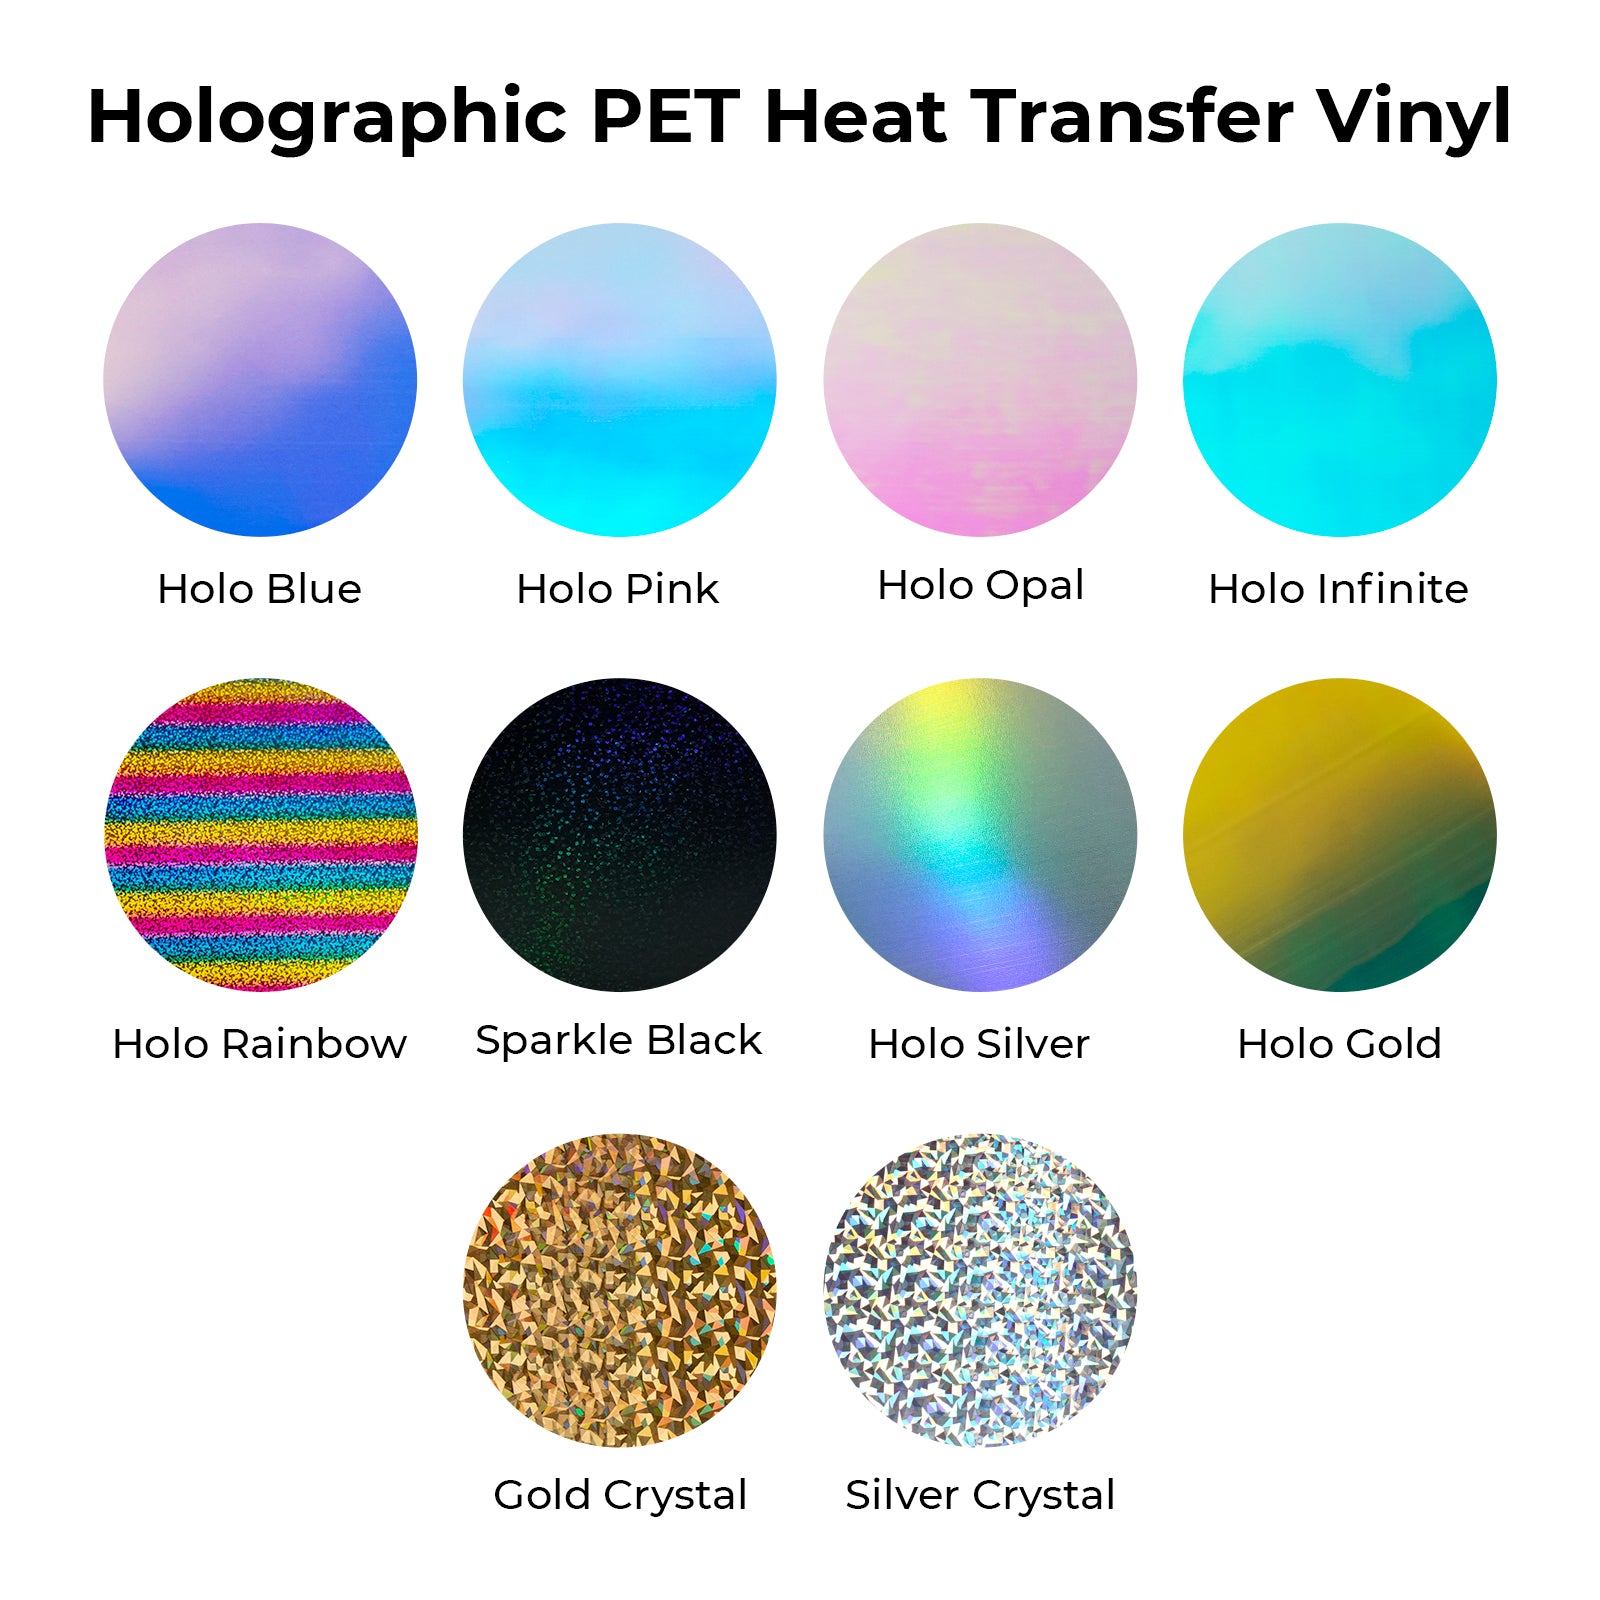 Holographic PET Heat Transfer Vinyl